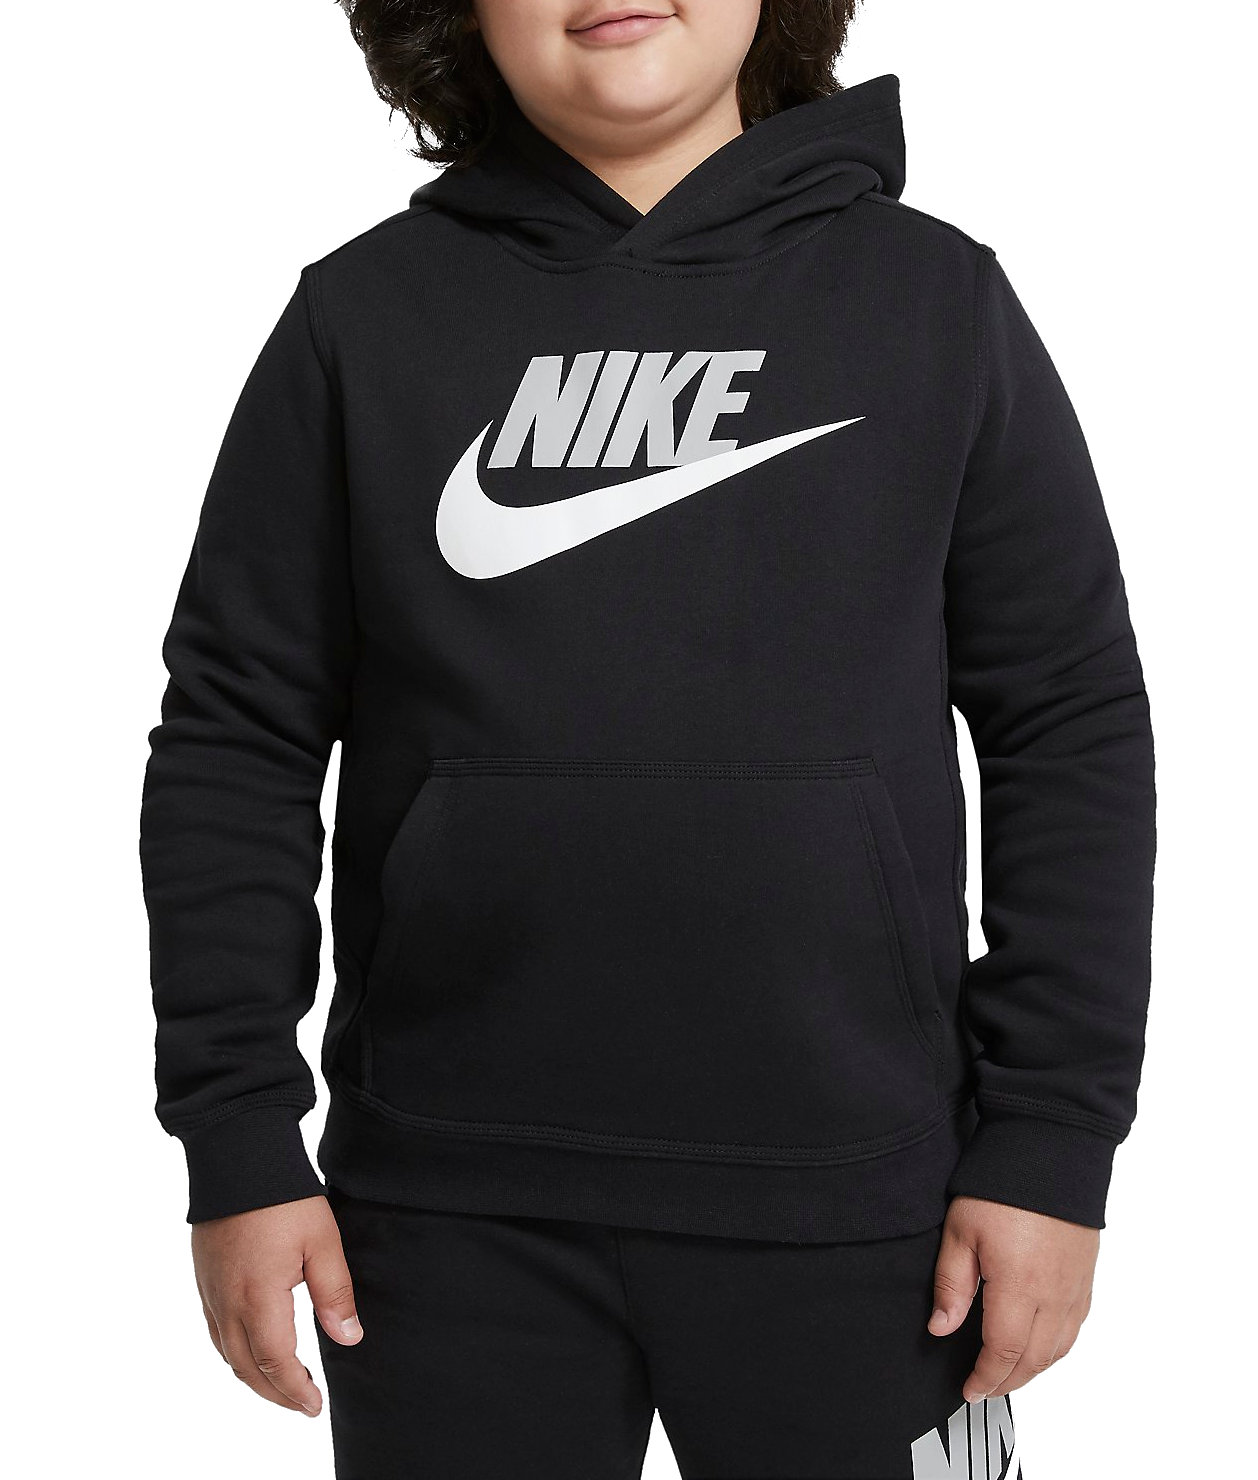 Hooded sweatshirt Nike Sportswear Hoodie Size) Kids (Extended Club (Boys Big Pullover Fleece )